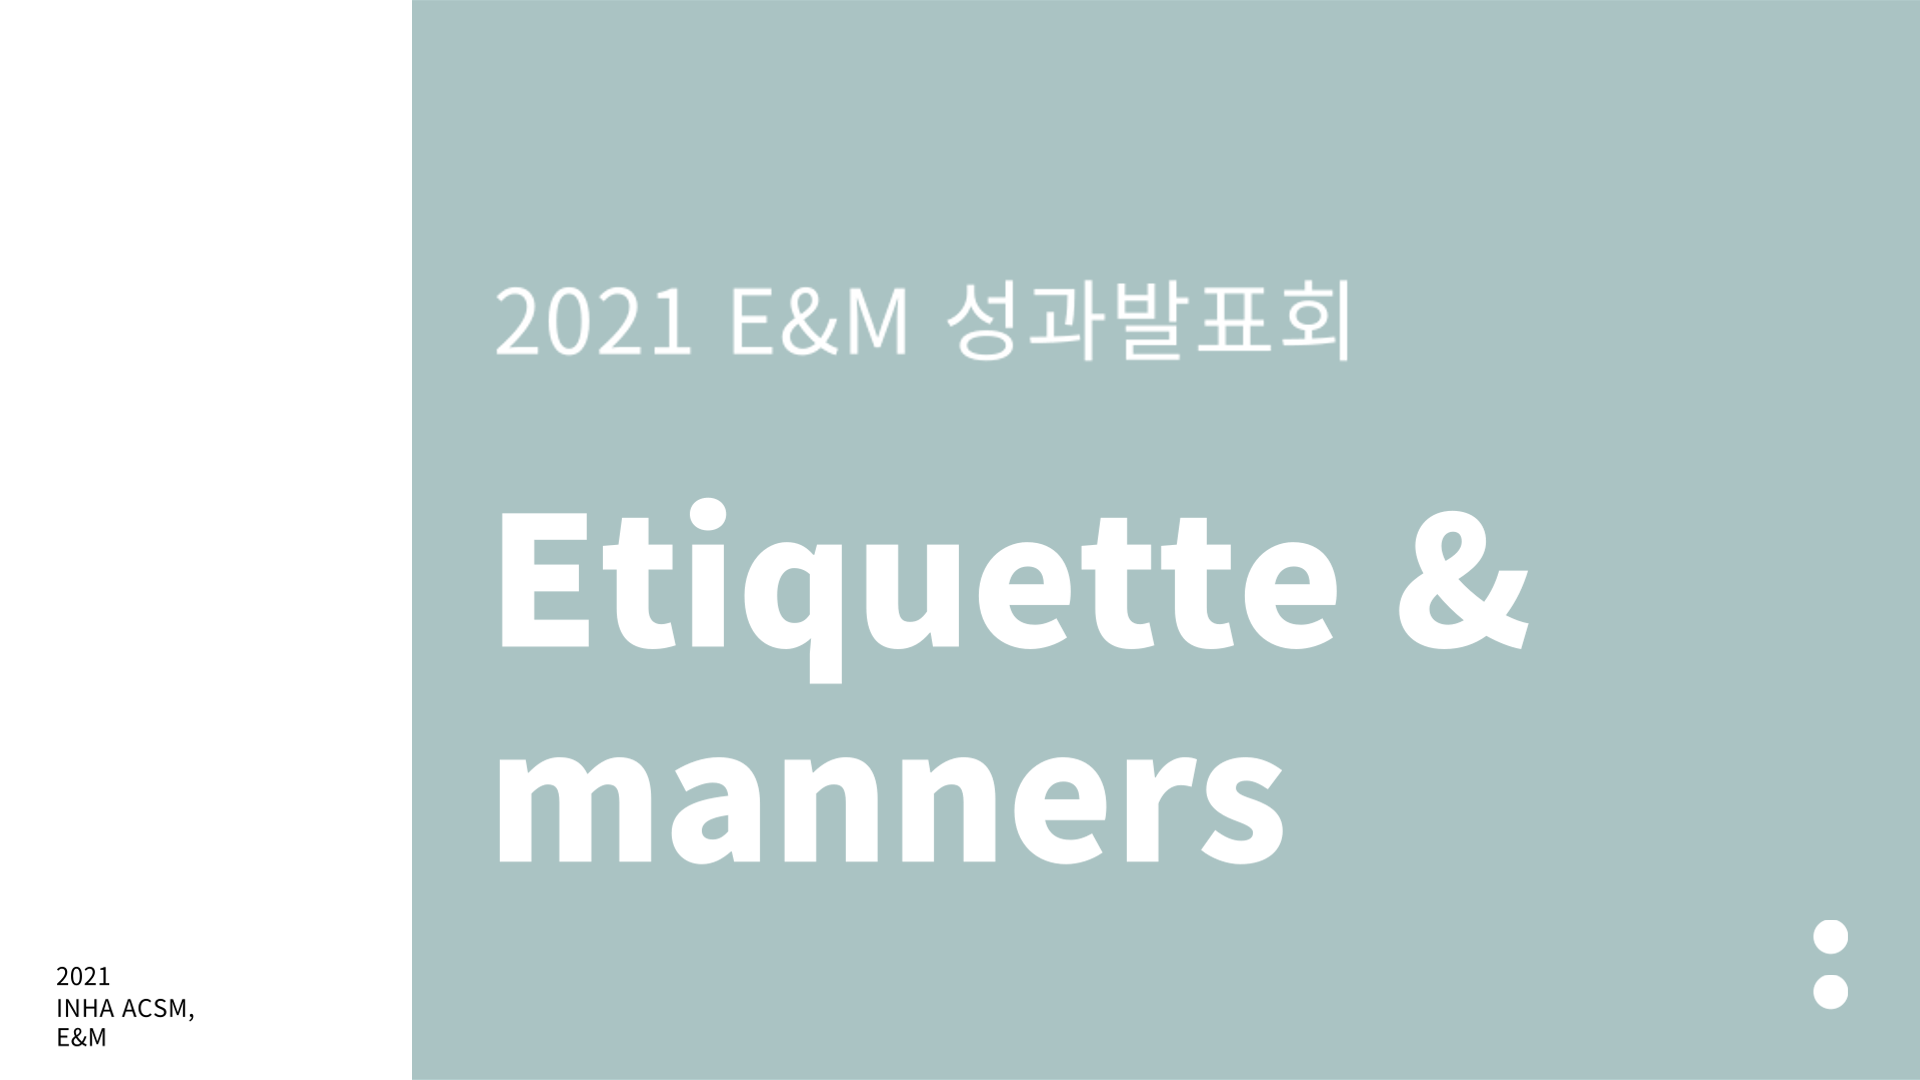 2021 E&M 성과발표 2021 E&M 성과발표_1.png